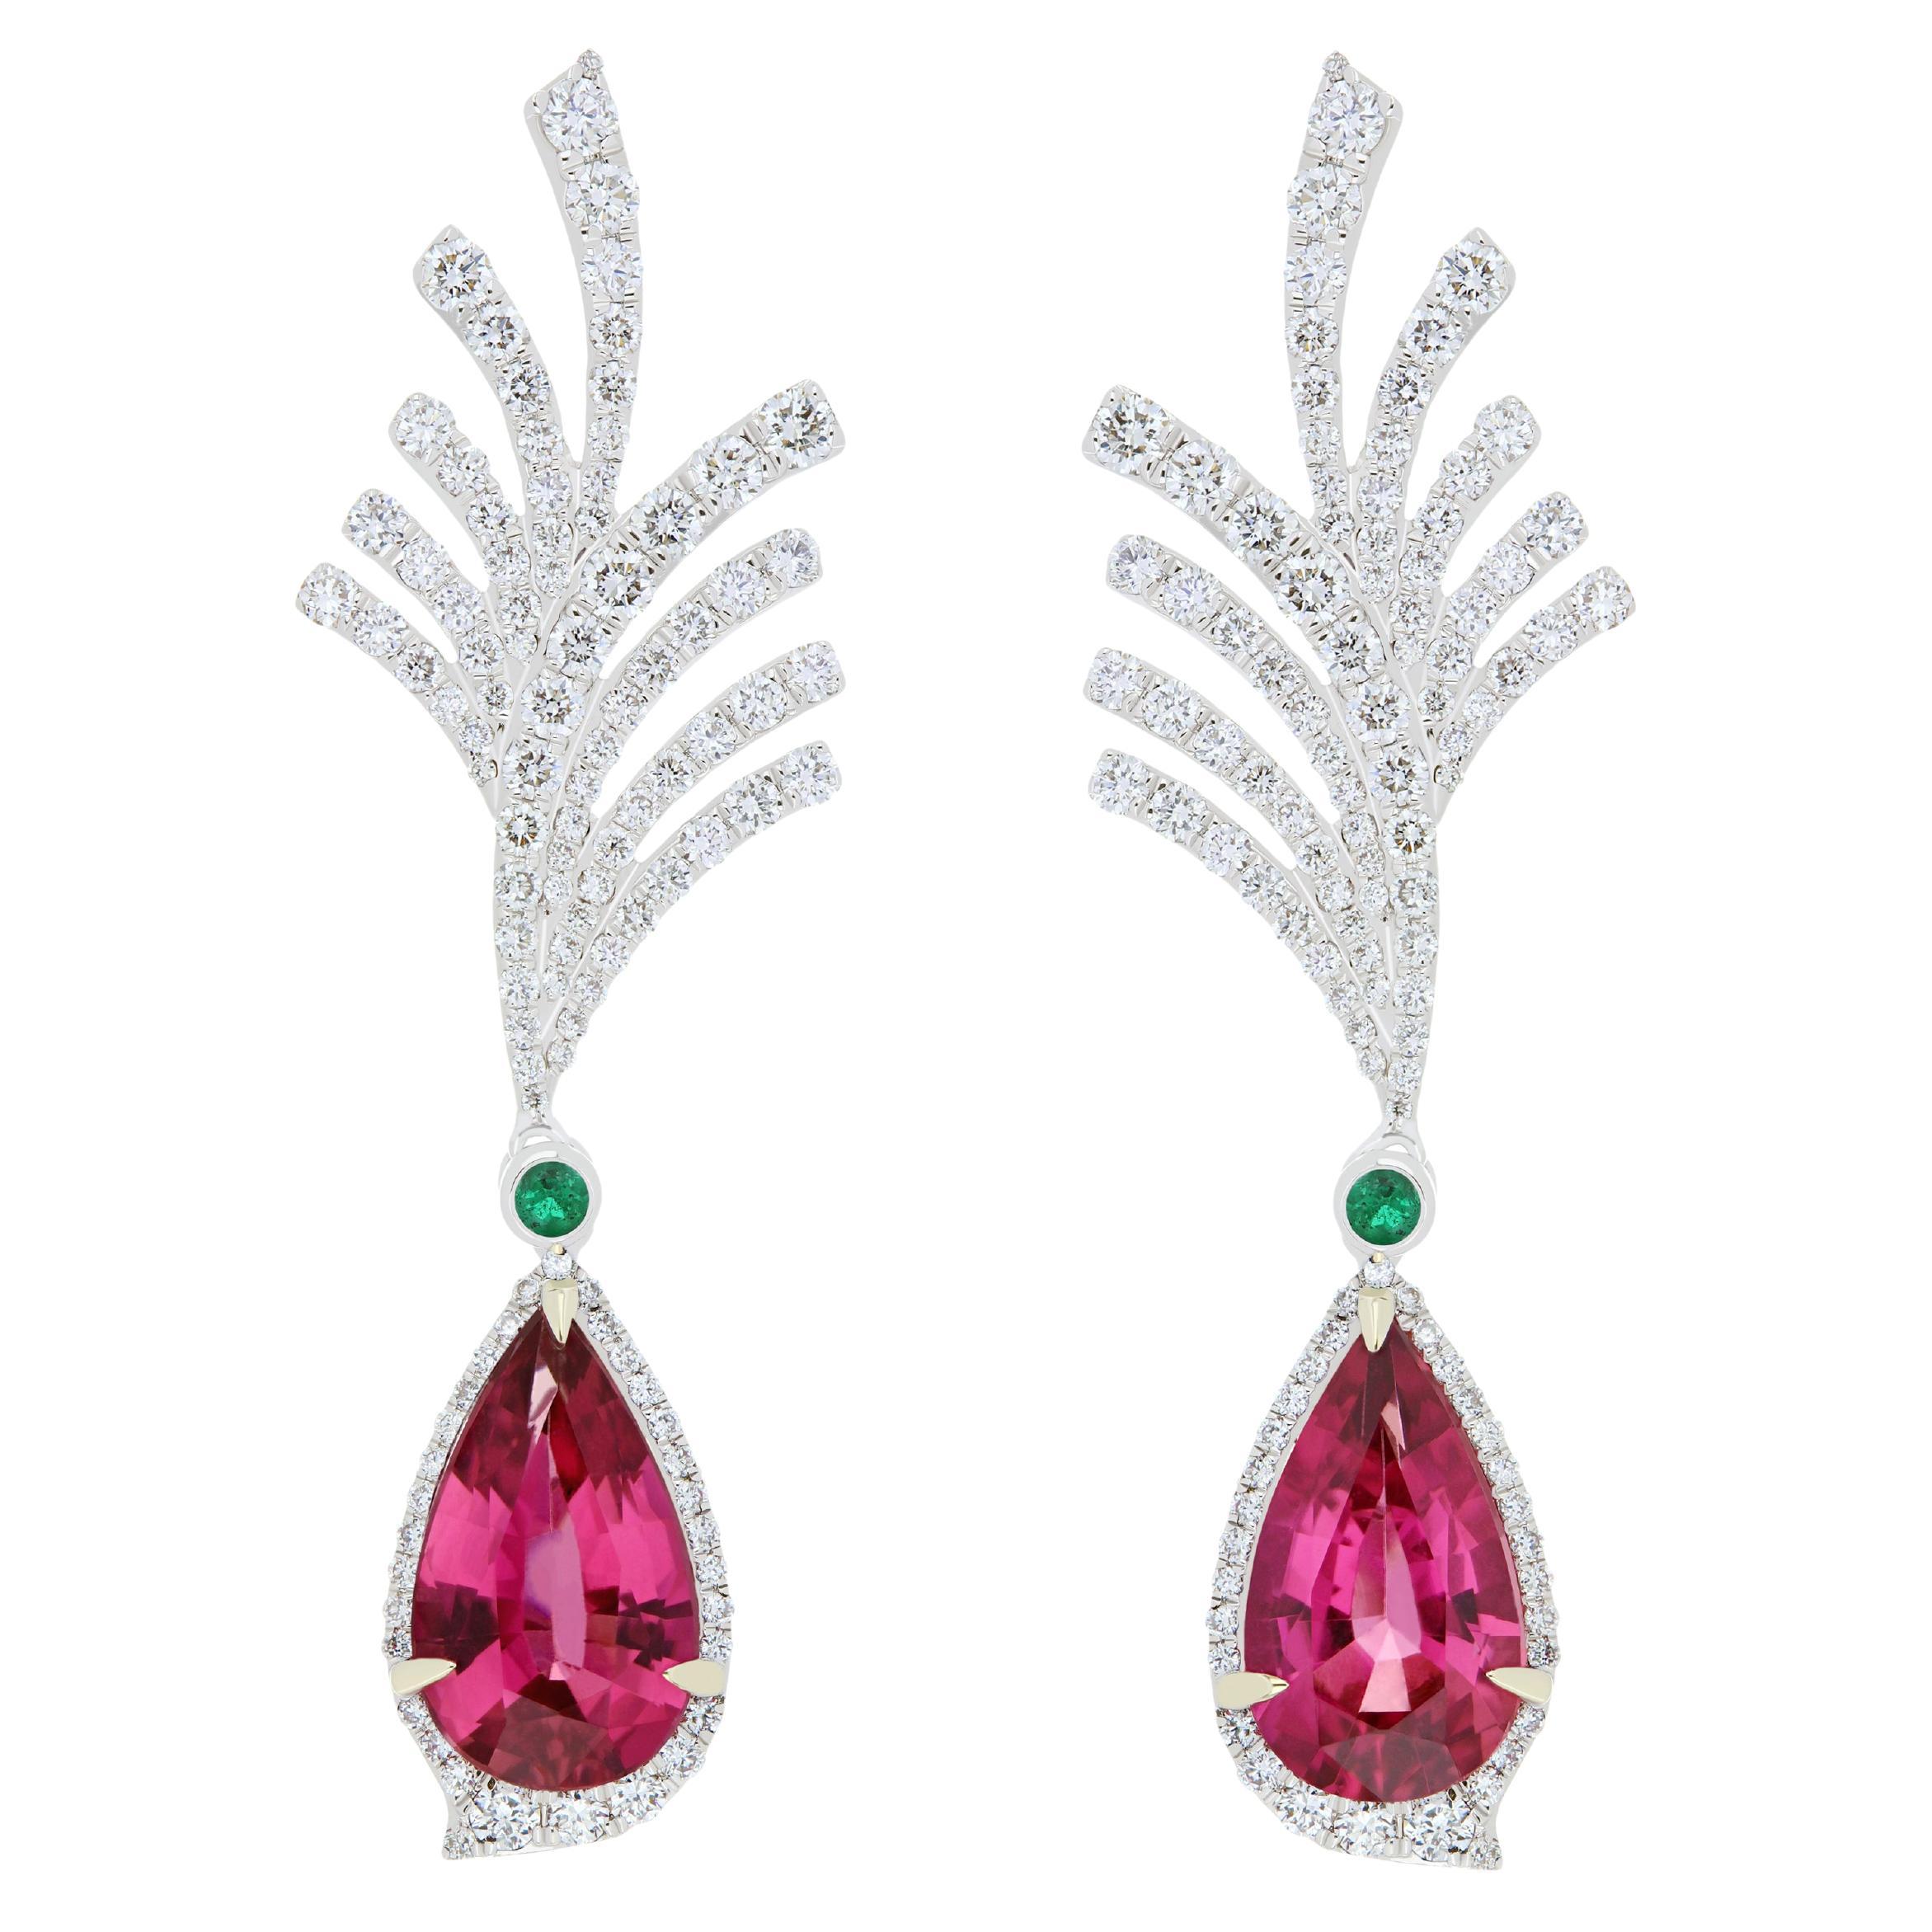 Rubelite, Emerald and Diamond Studded Earrings in 18K White Gold 